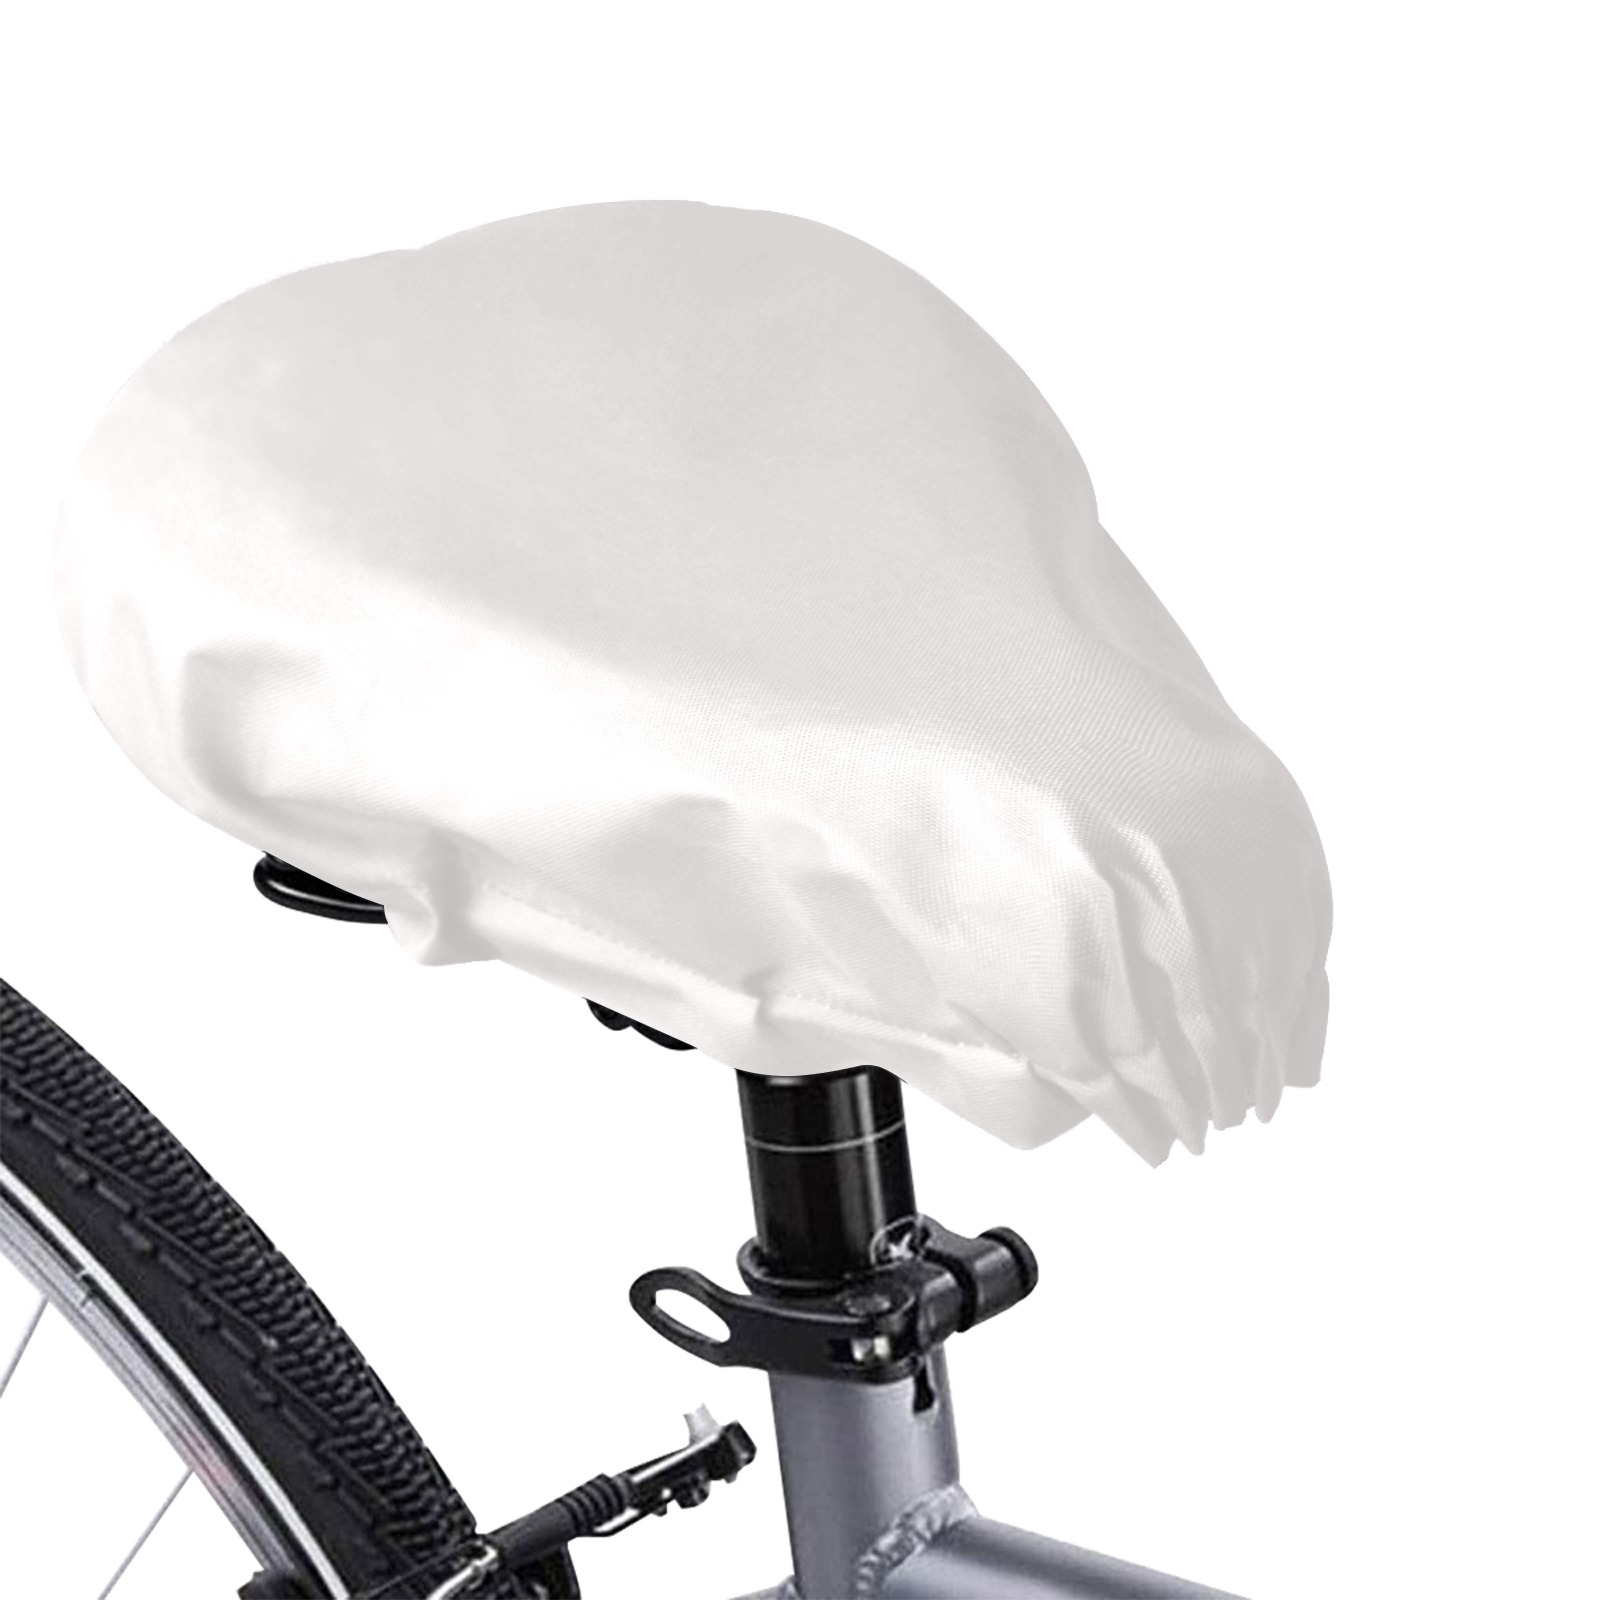 Waterproof Bicycle Seat Cover